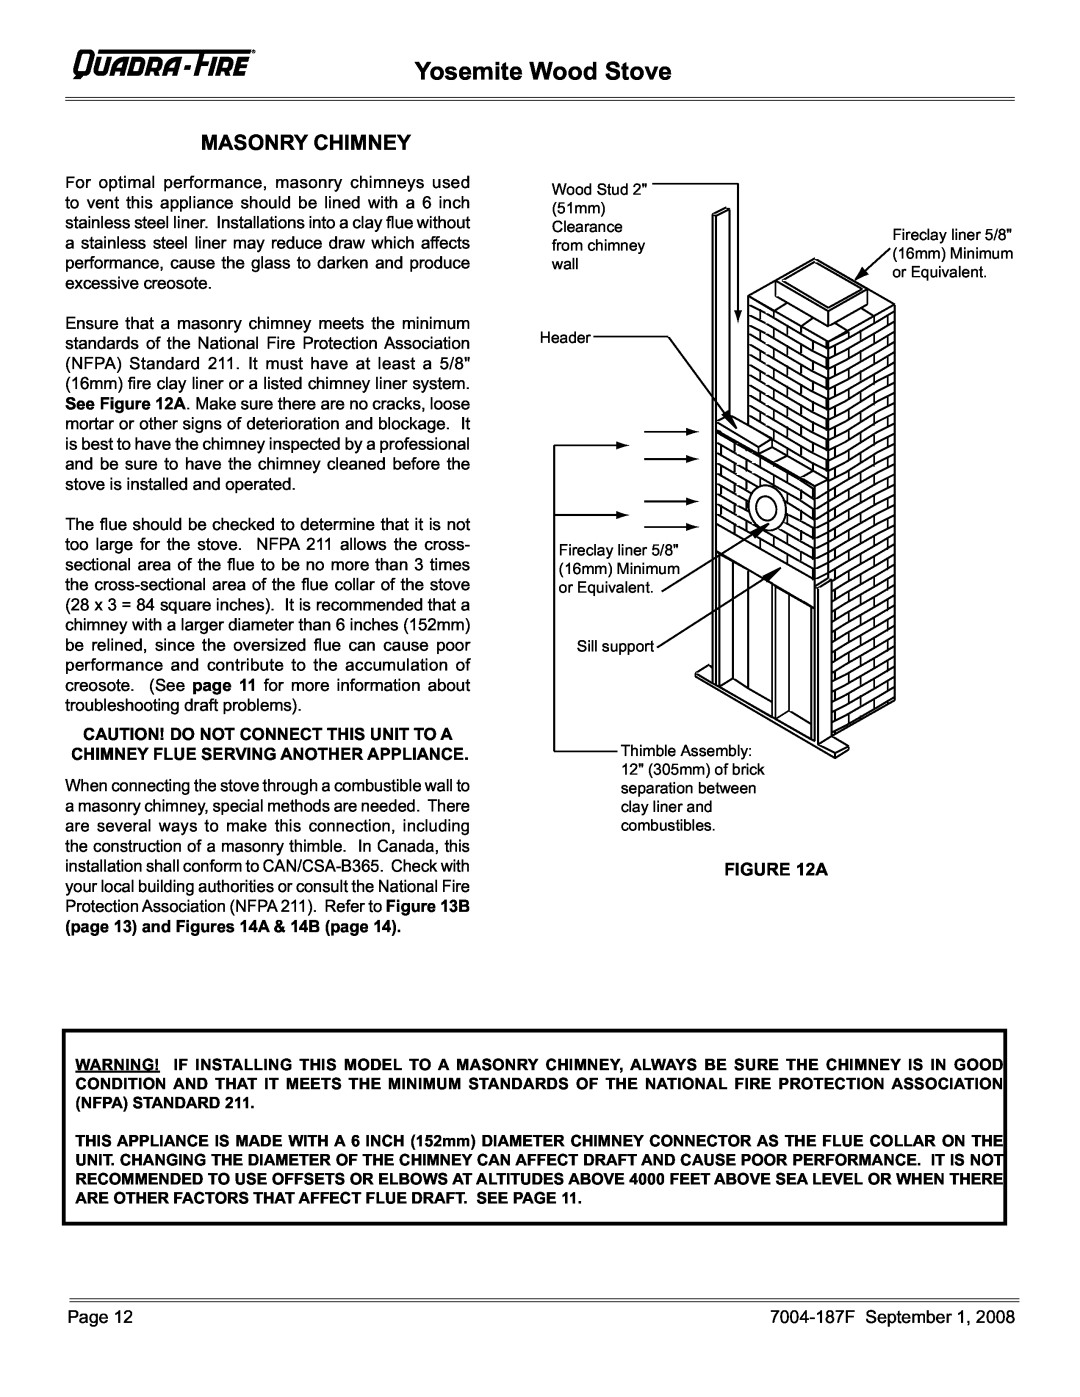 Hearth and Home Technologies PMH, MBK installation instructions Masonry Chimney, Yosemite Wood Stove, A 